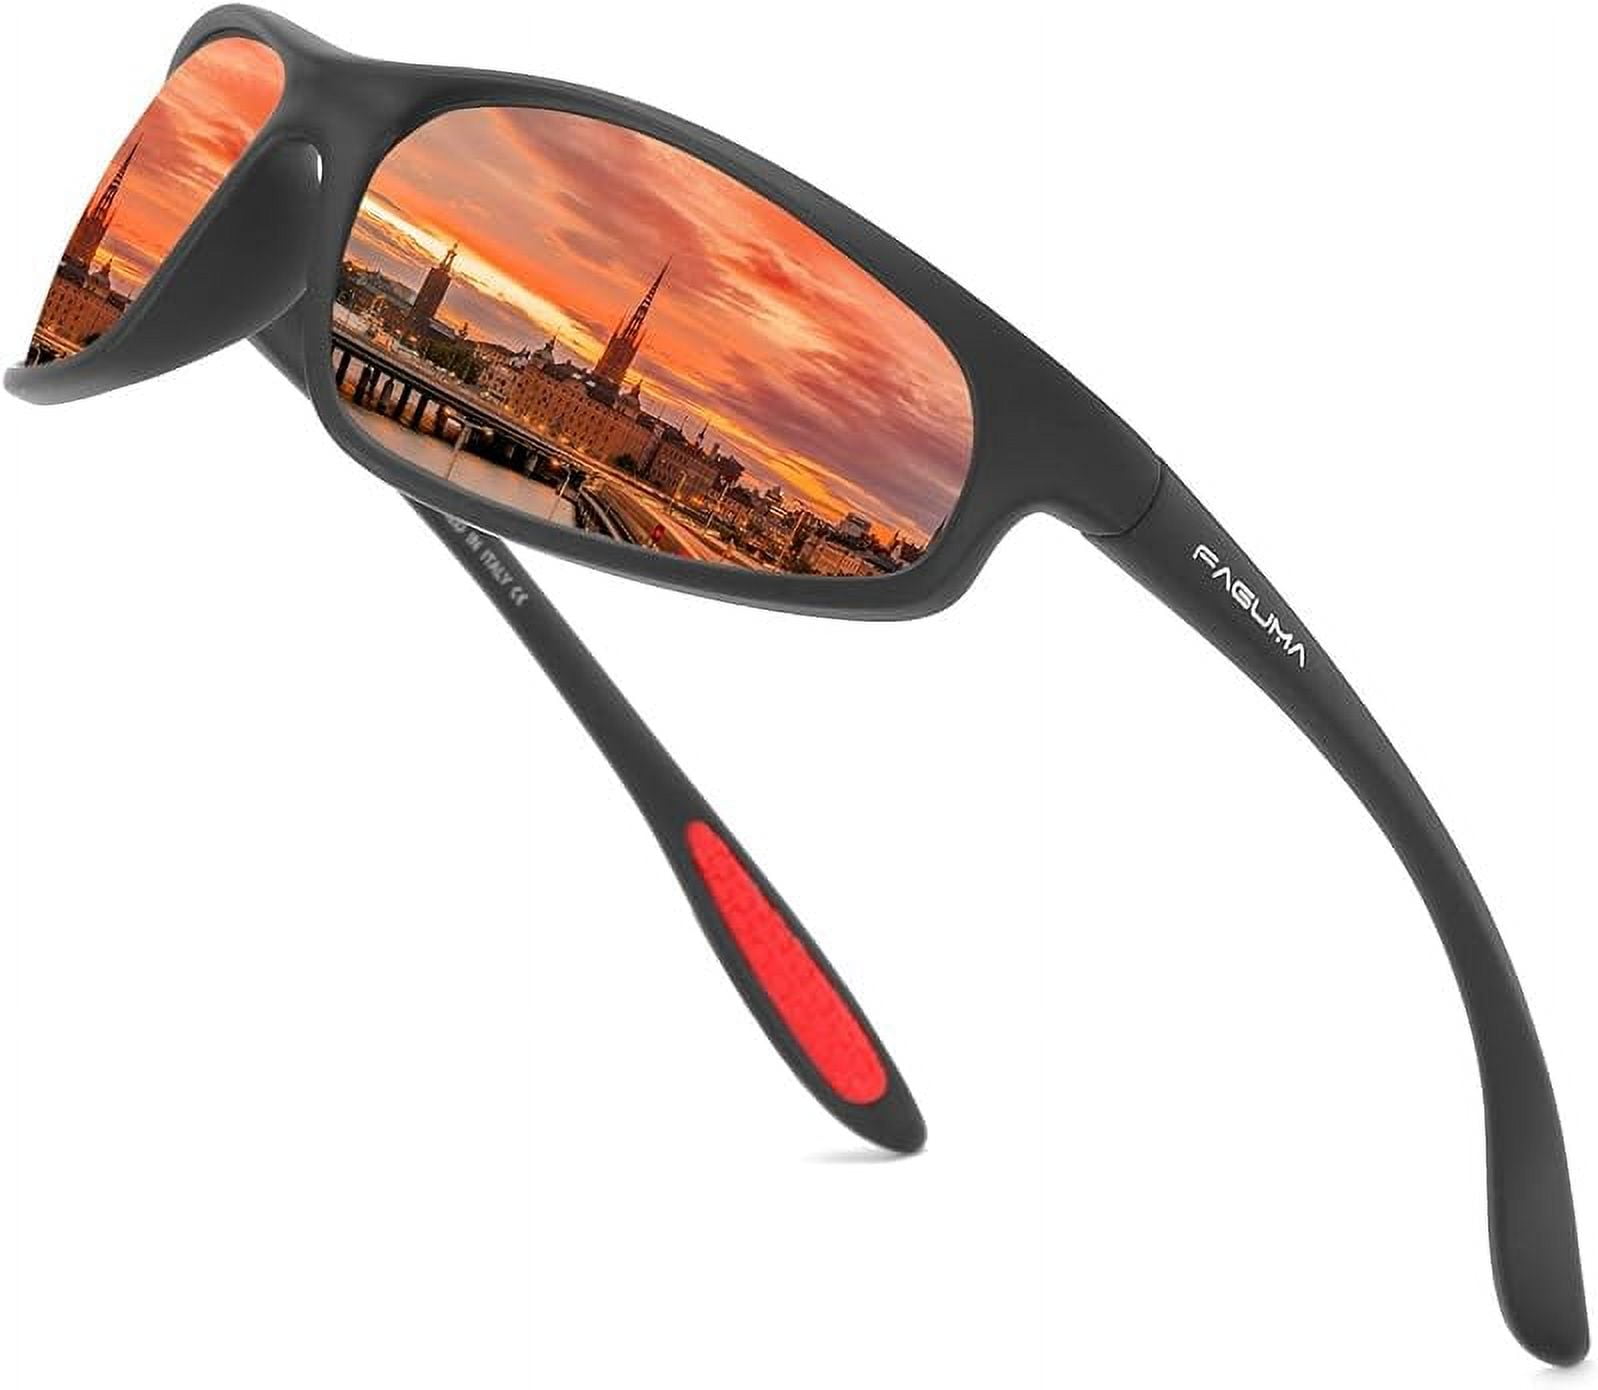 Sports Polarized Sunglasses - 100% UV Protection, Lightweight - Risk-Free